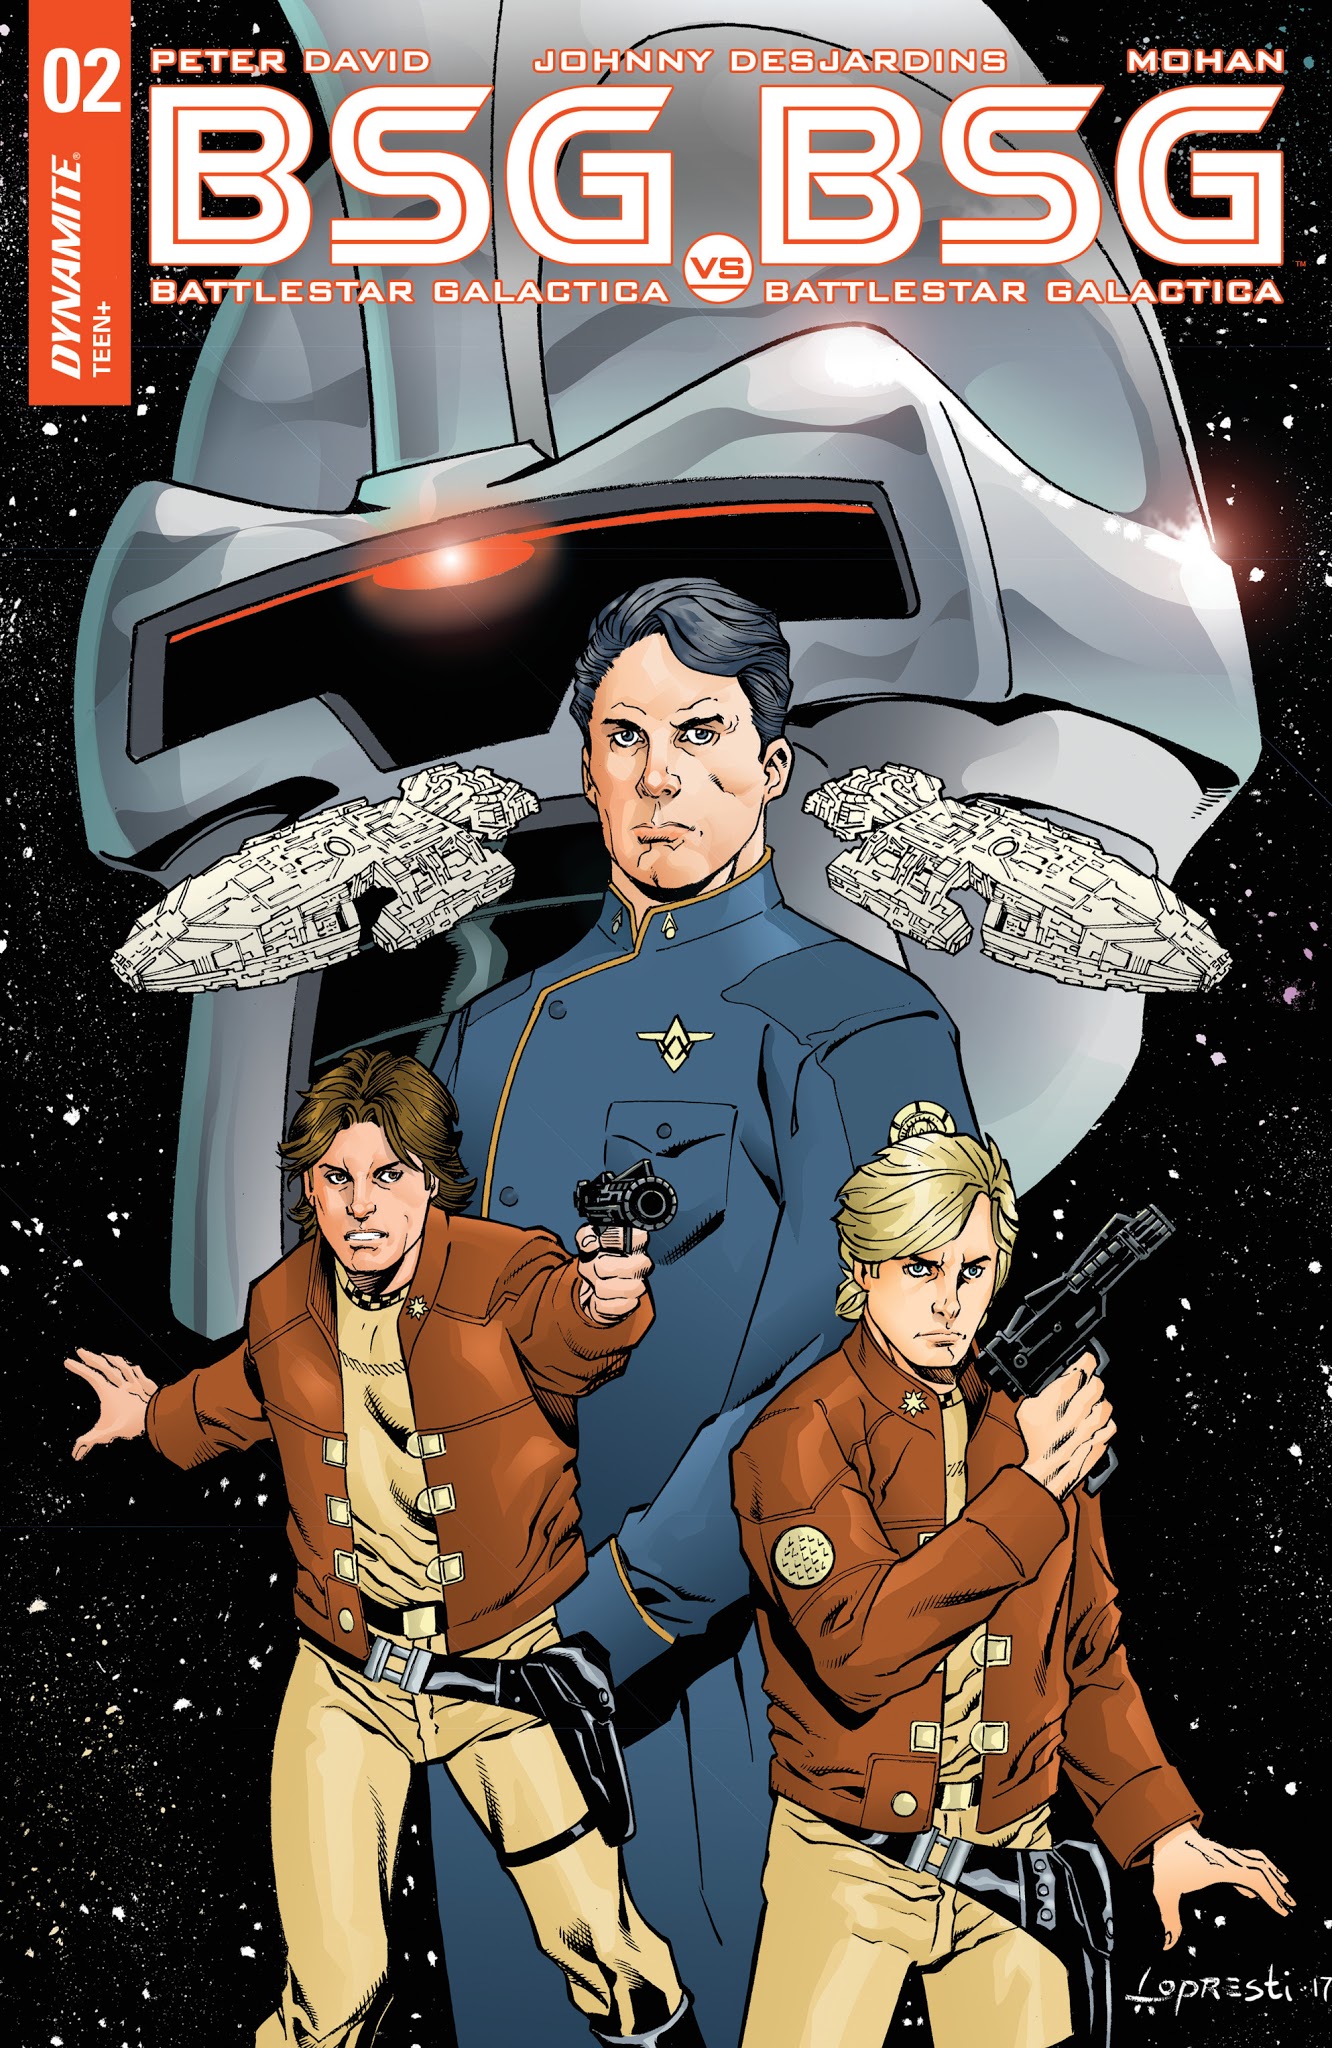 Read online Battlestar Galactica BSG vs. BSG comic -  Issue #2 - 1